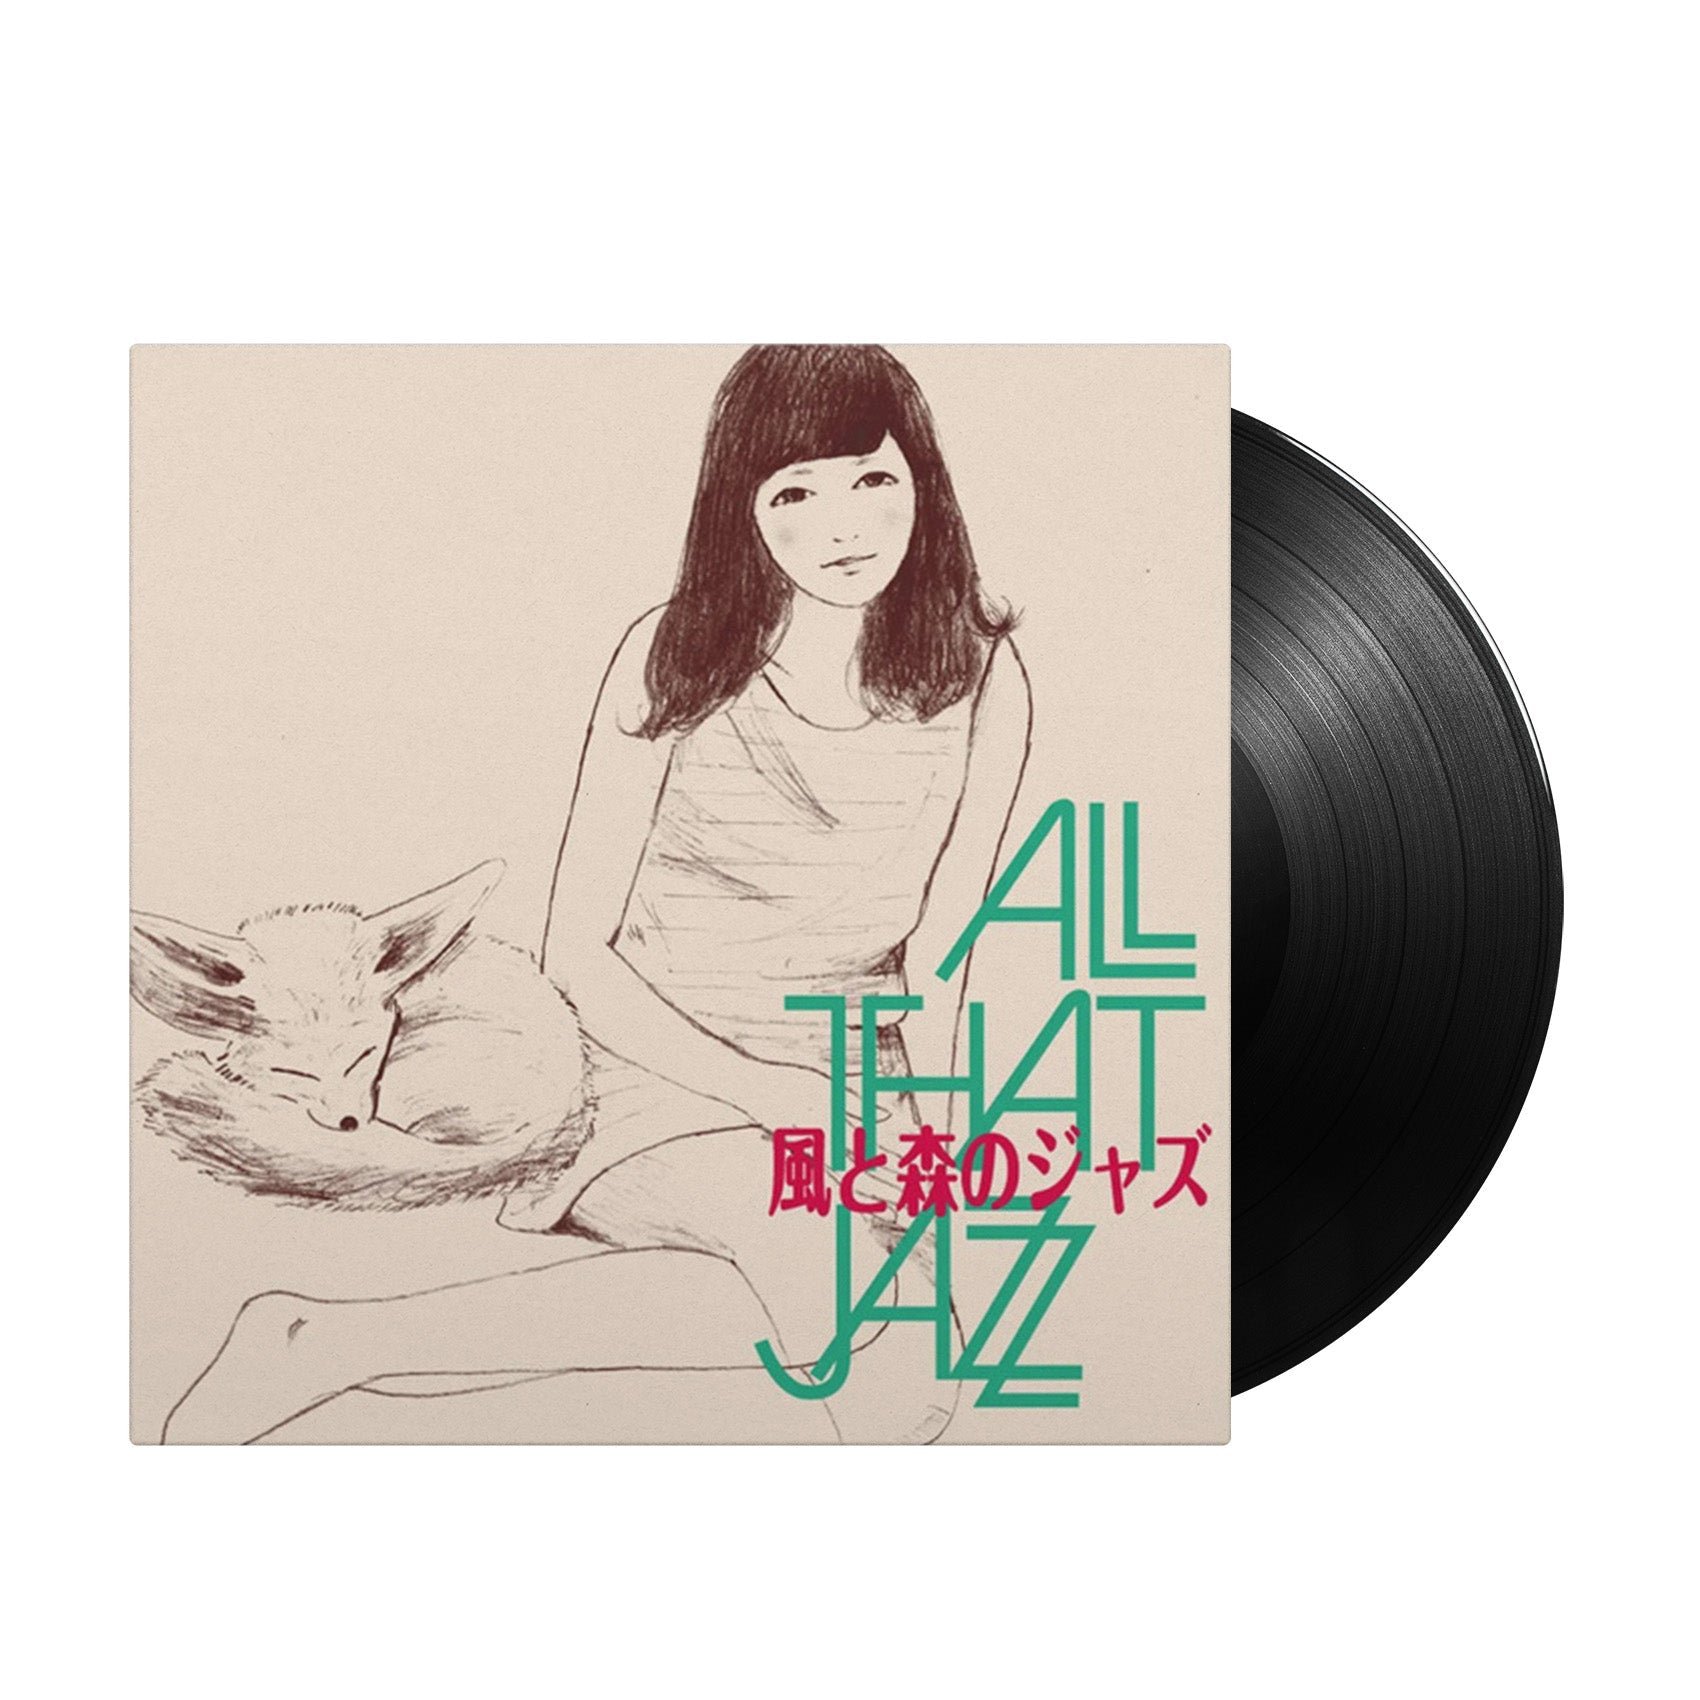 All That Jazz - Kaze to Mori no Jazz - Inner Ocean Records